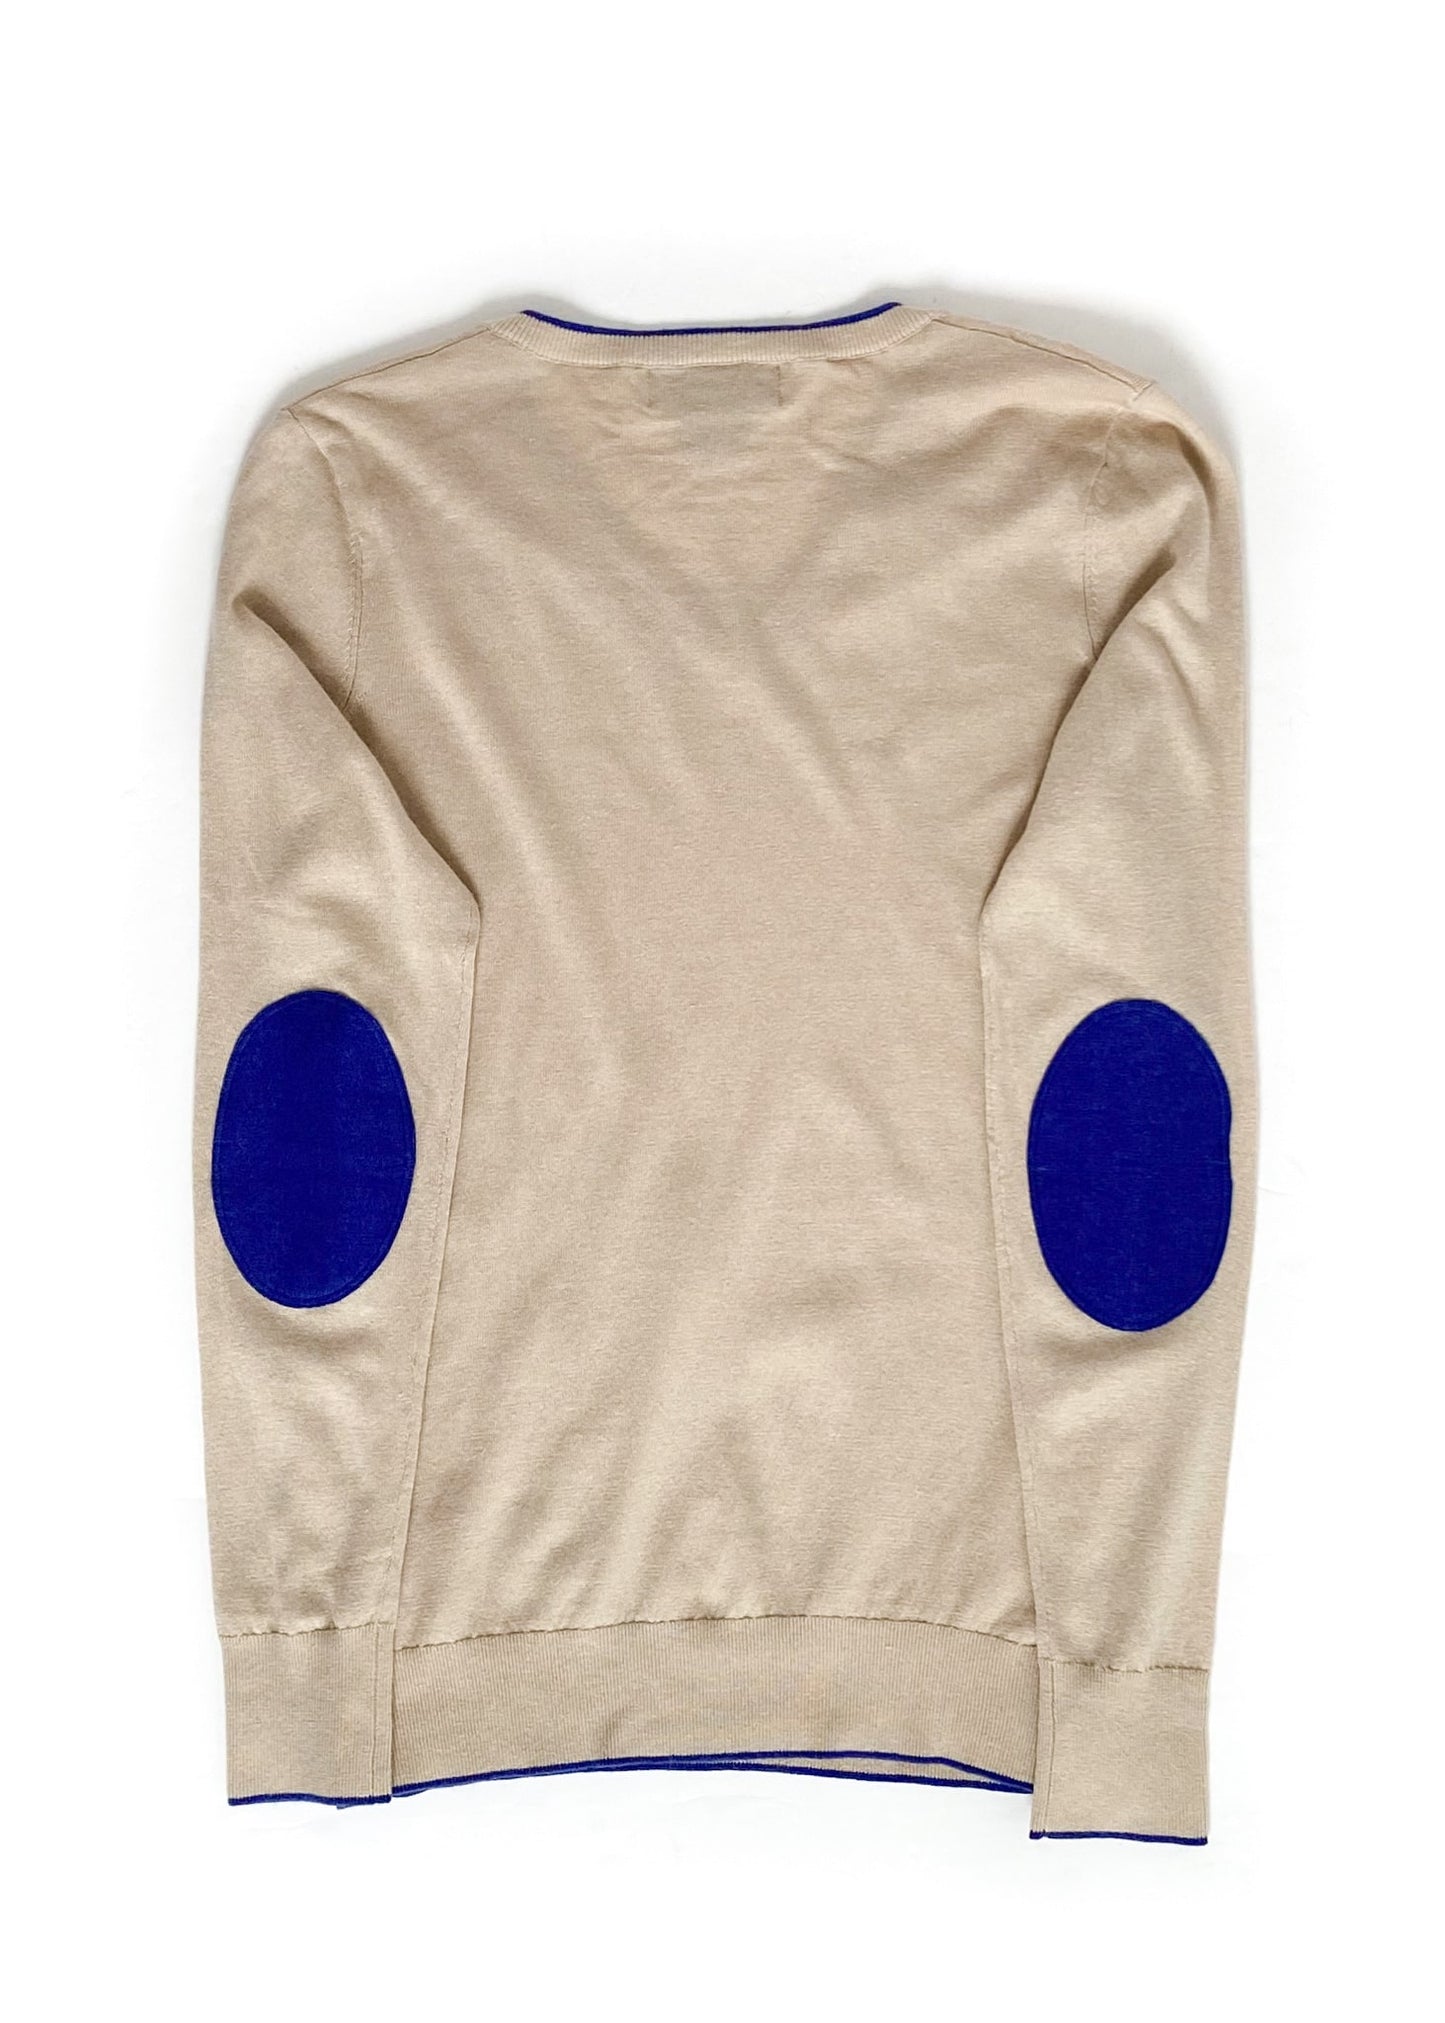 Essex Classics Trey V-Neck Sweater - Large - Oatmeal